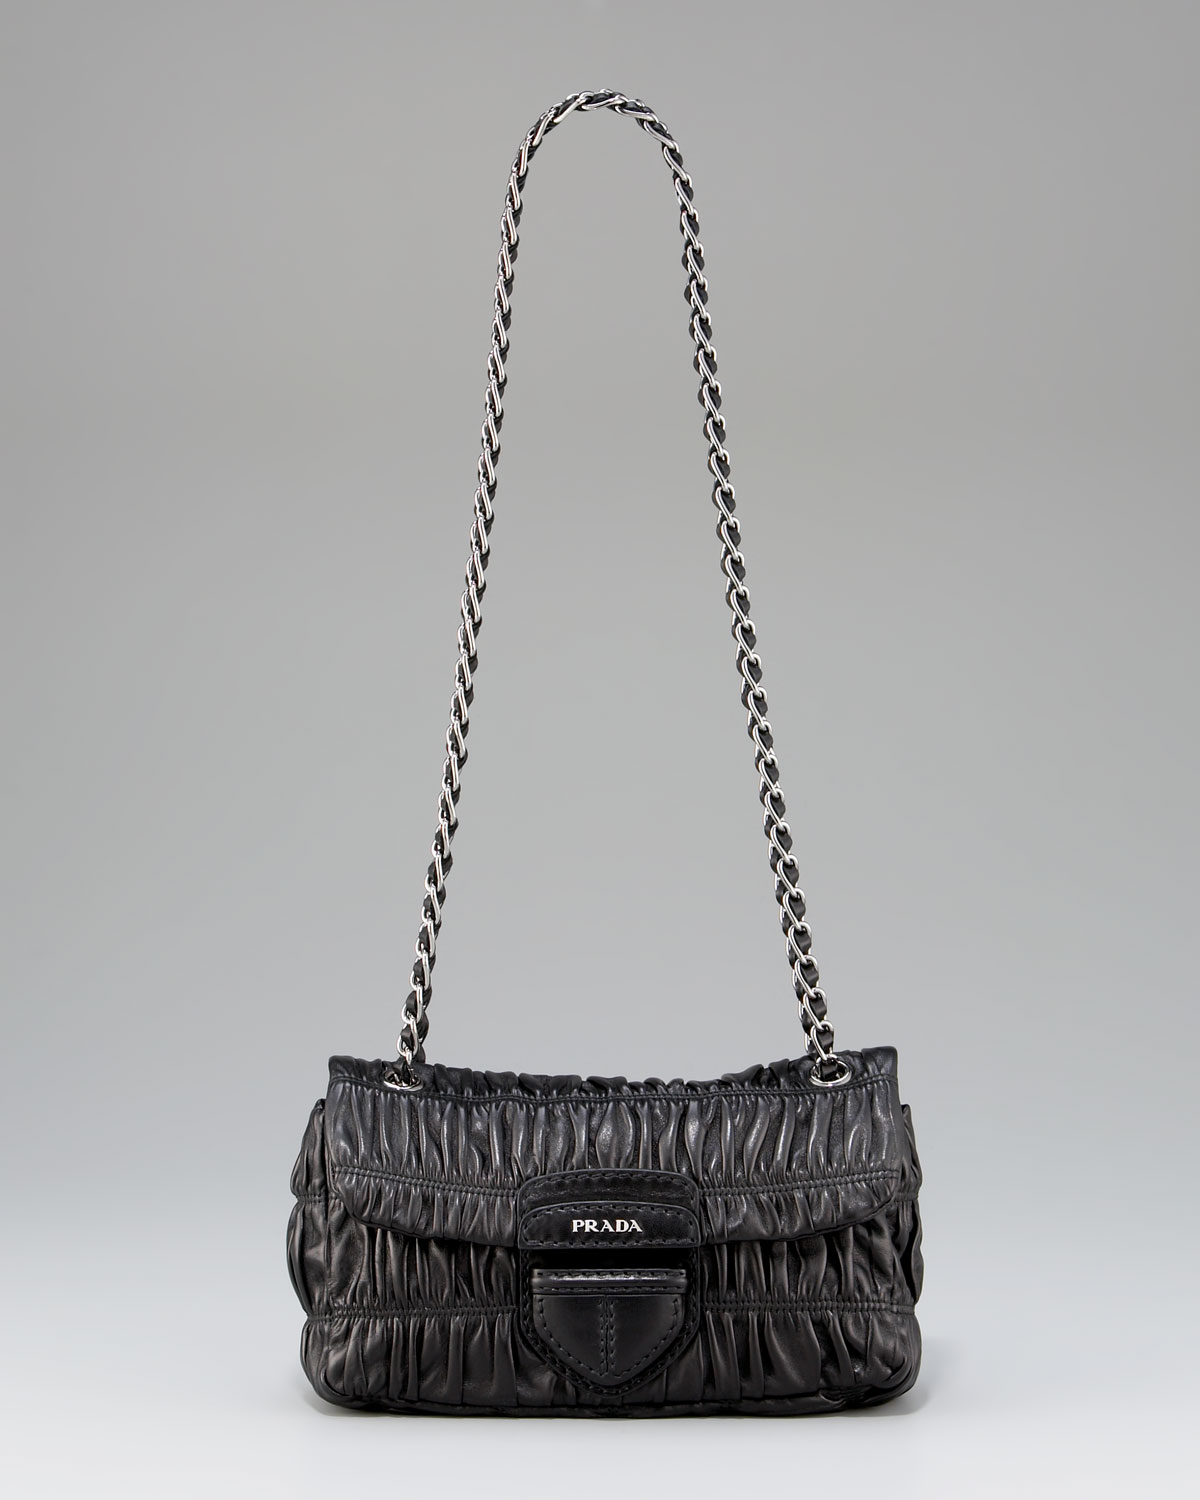 Prada Medium Leather Chain-detail Shoulder Bag in Black - Lyst